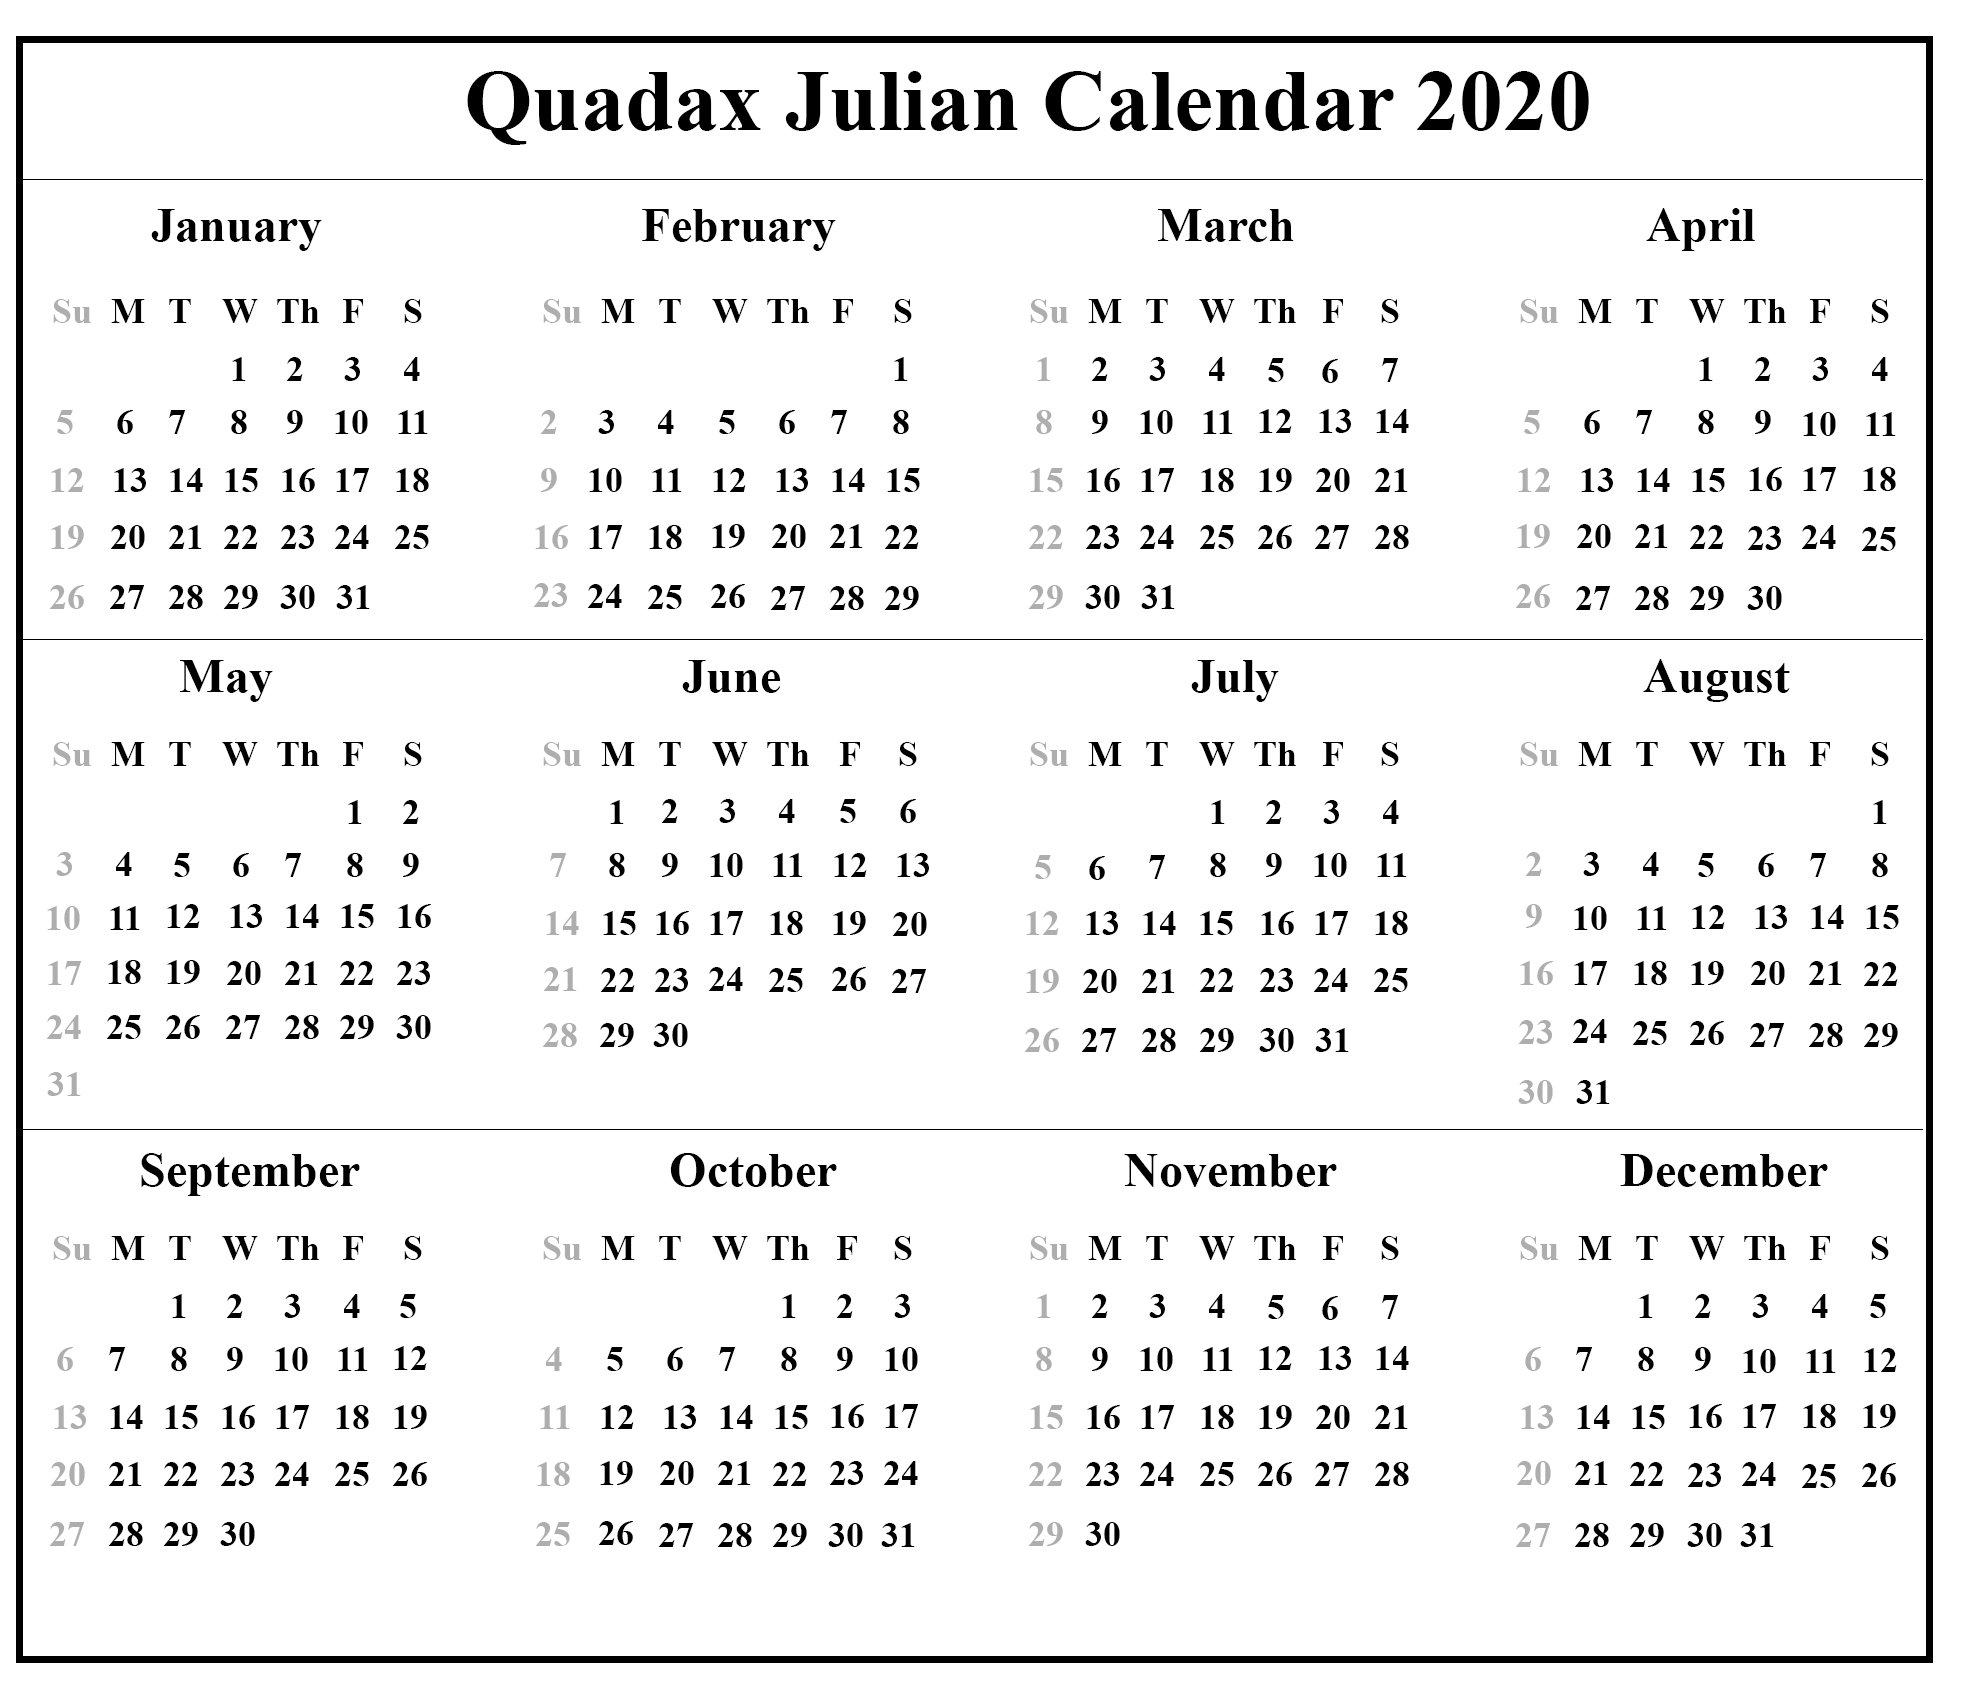 Julian Calendar 2020 Pdf Quadax | Example Calendar Printable inside Julian Calendar Quadax 2020